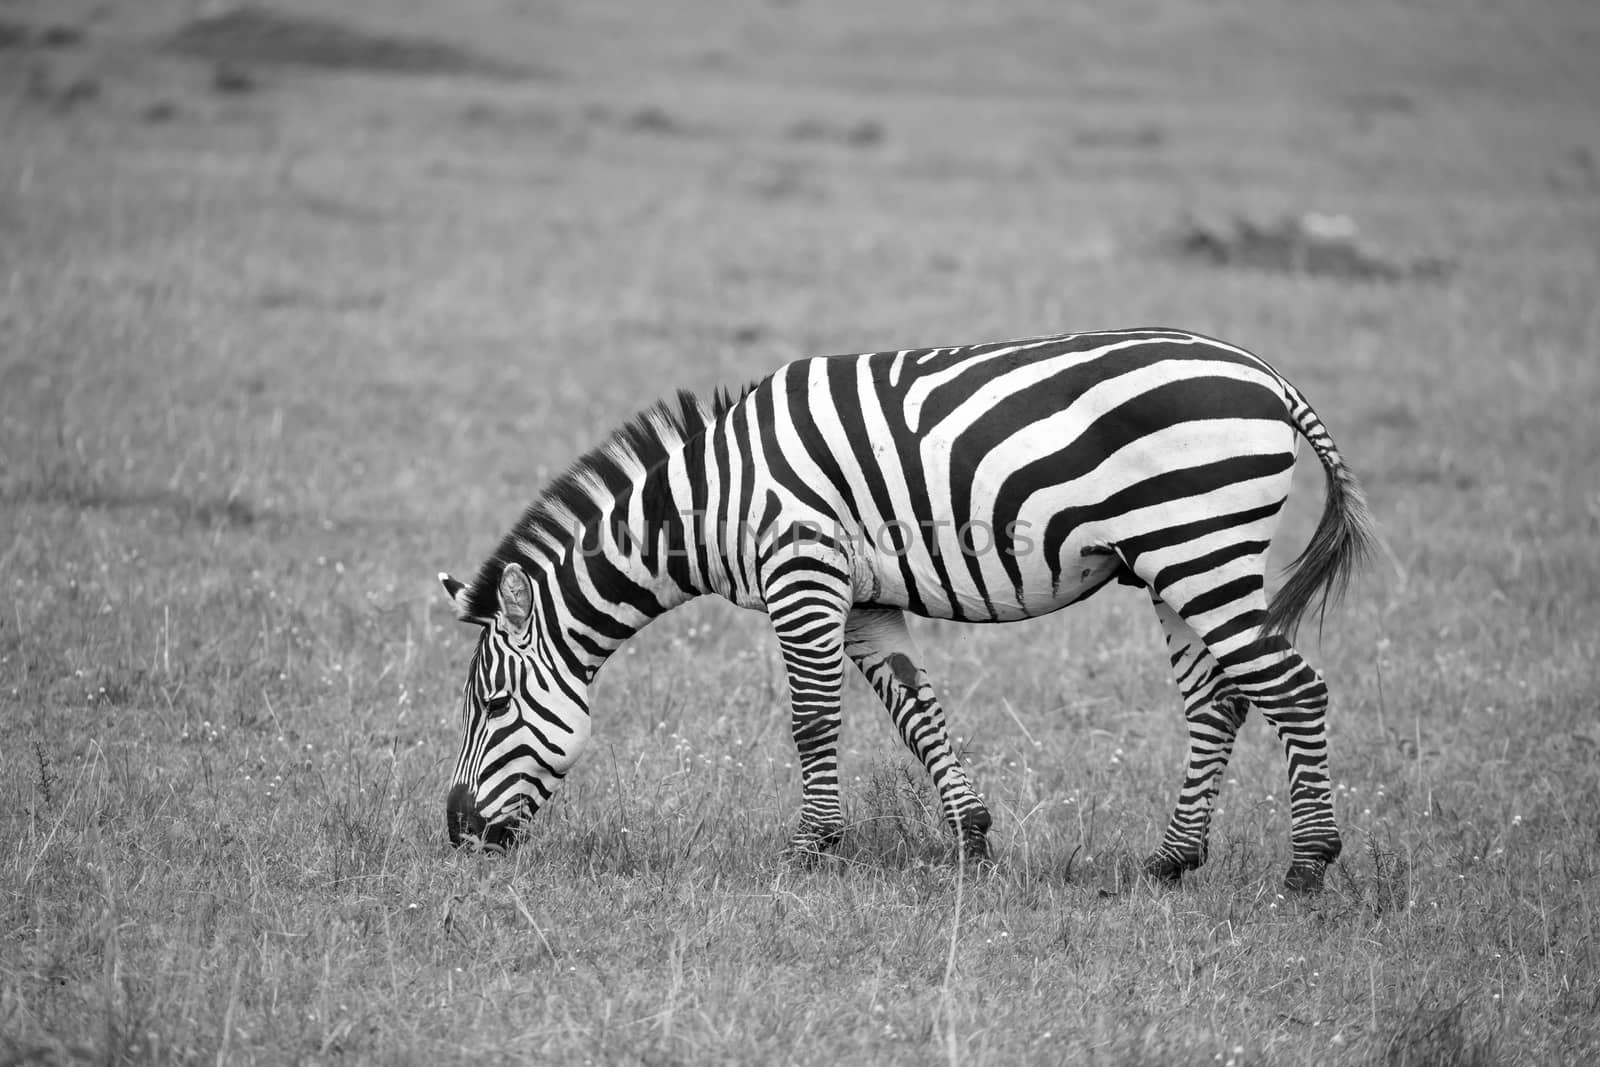 Some zebras run and graze in the savannah